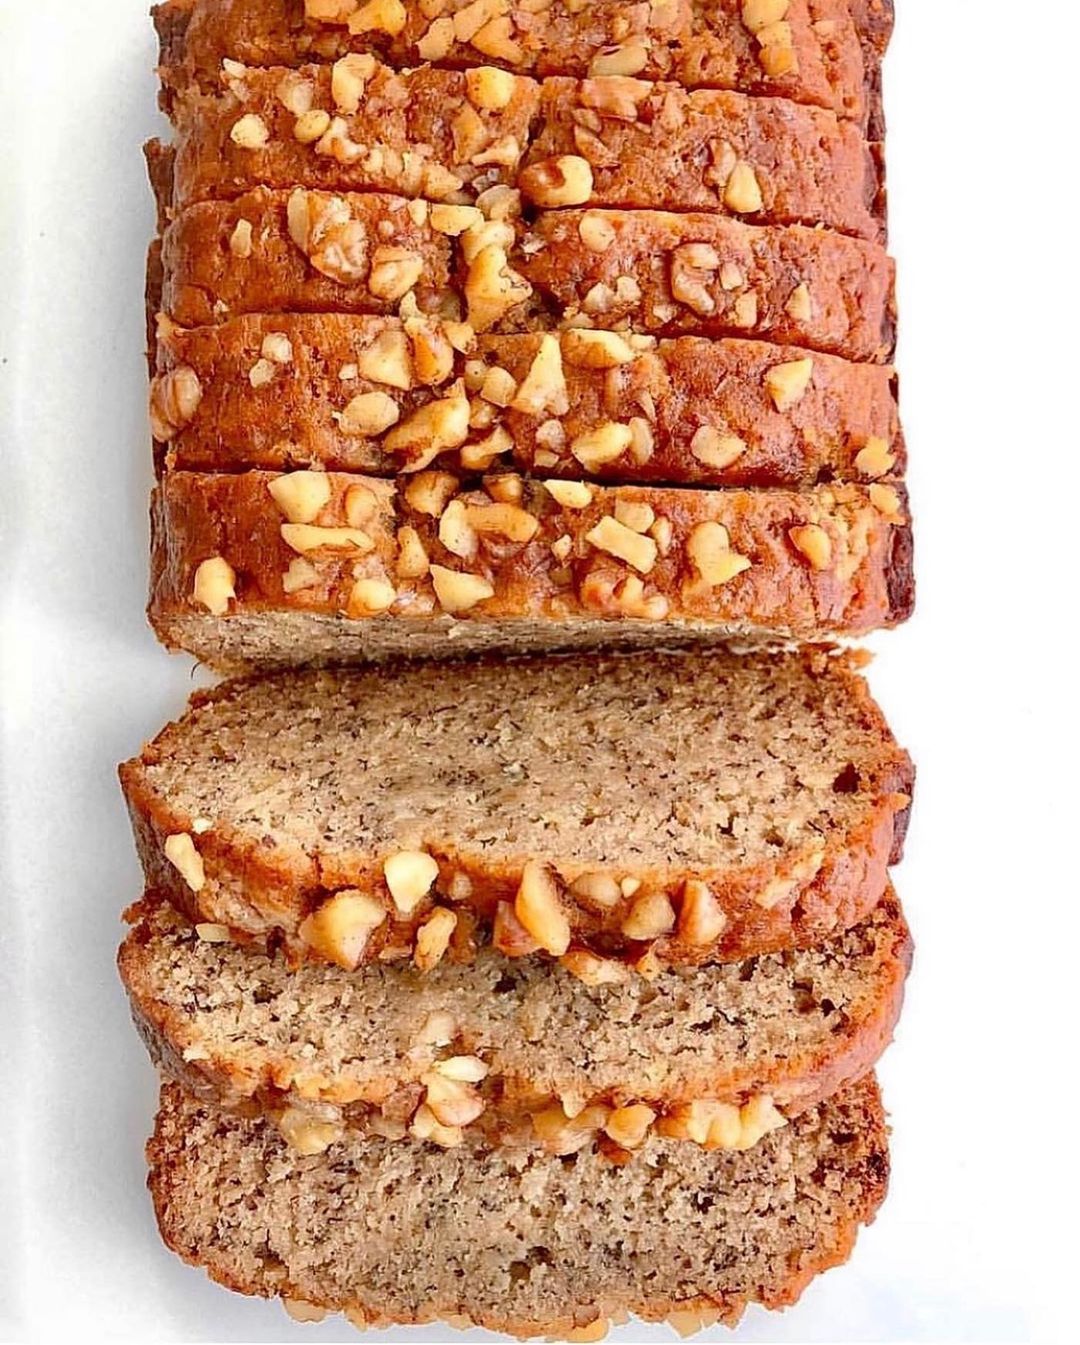 Peanut butter bread